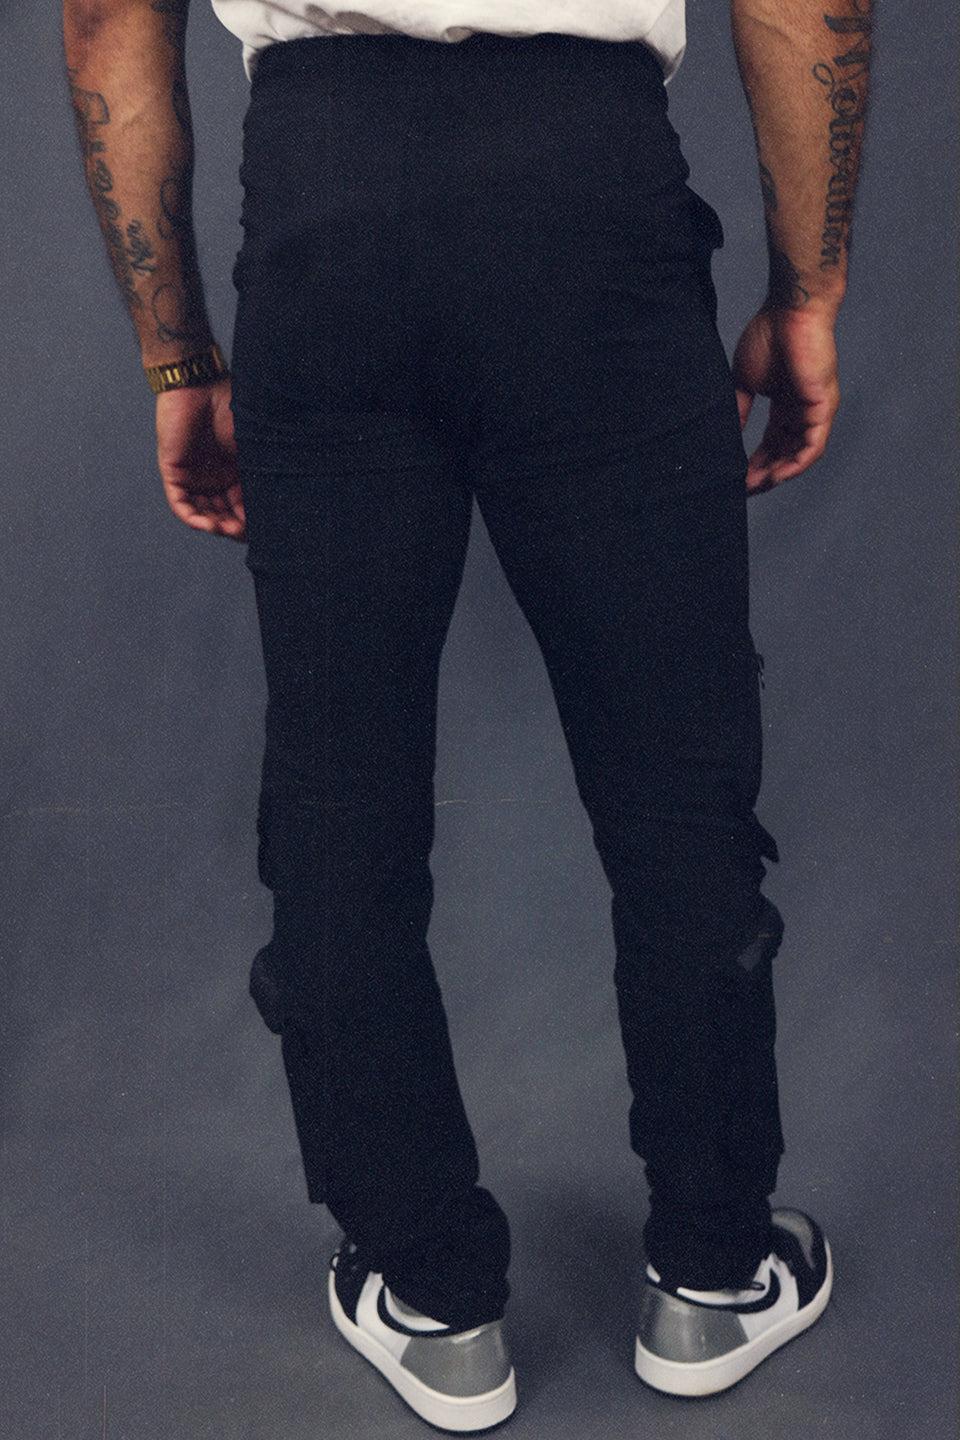 Men's Tactical Nylon Track Pants Street Sweatpants Utility Joggers with Zipper Pockets | Black back view